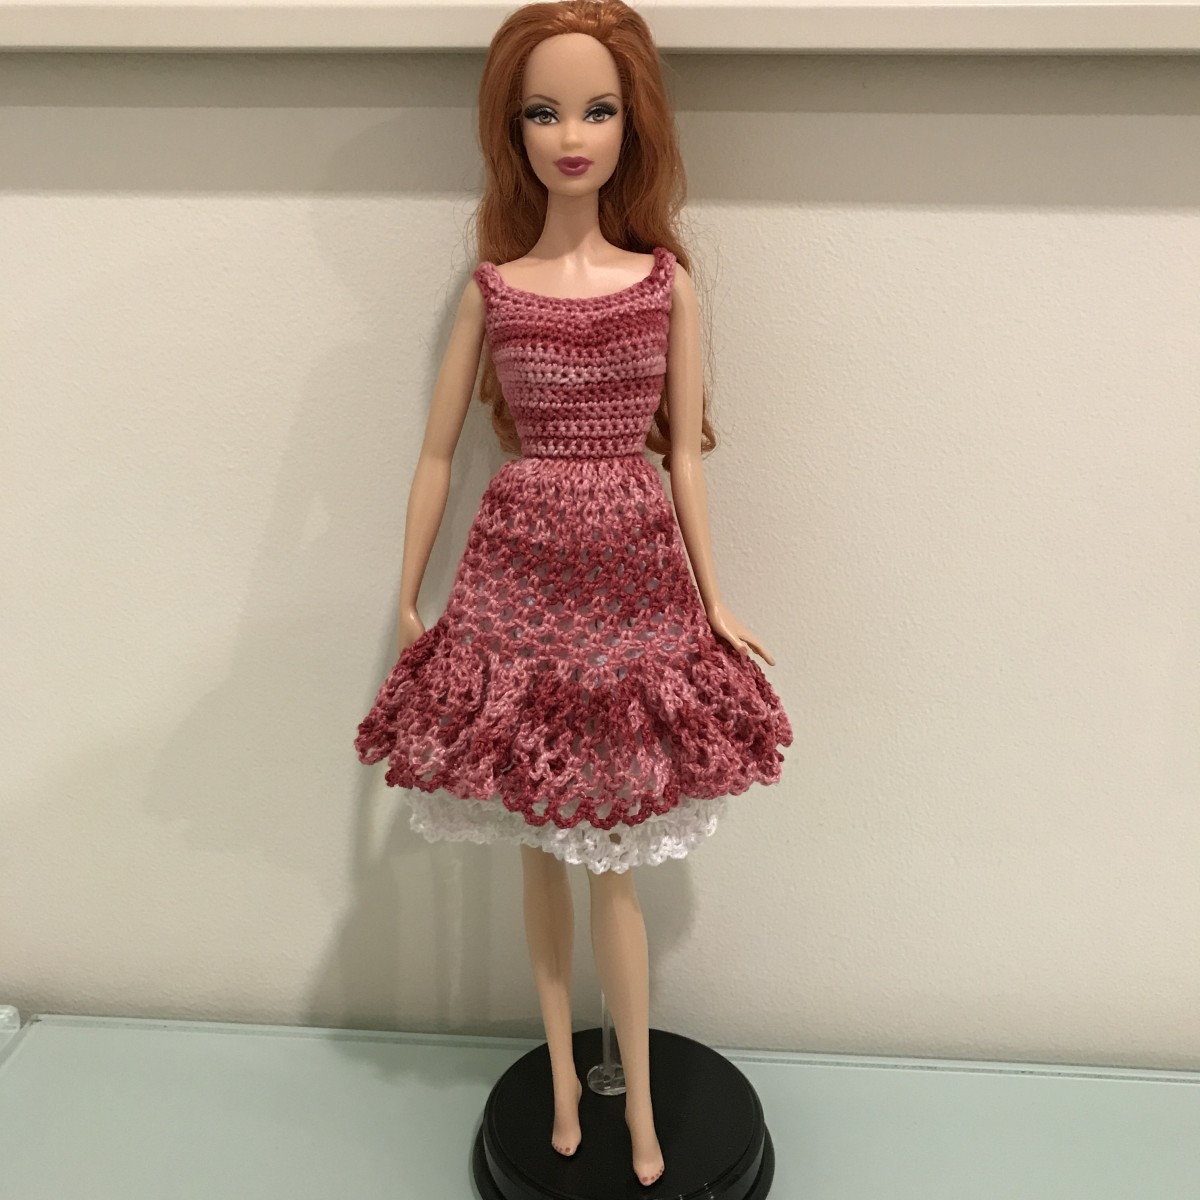 Barbie sleeveless petticoat dress